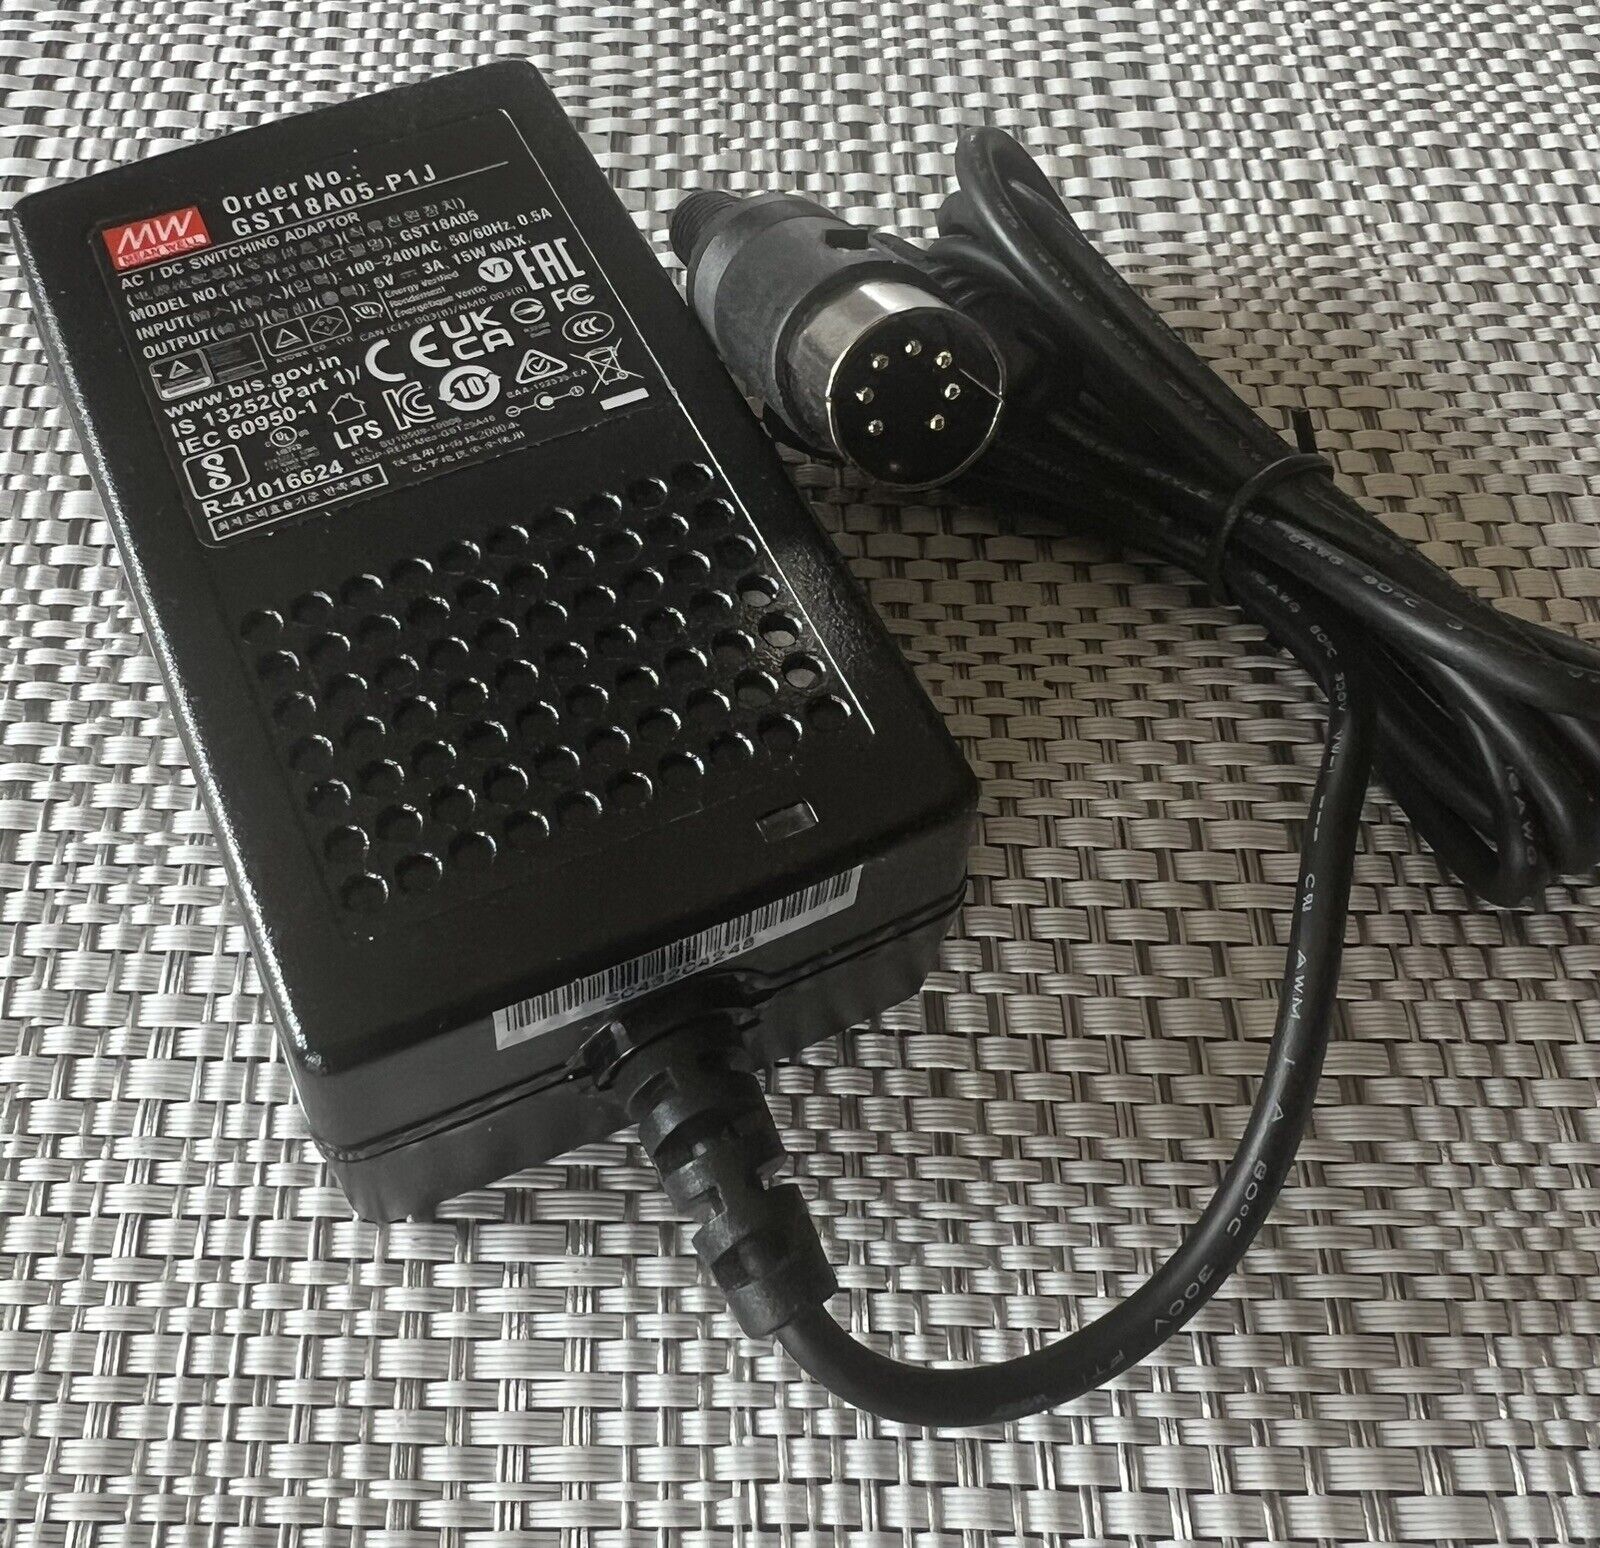 Atari 800 XL 130 XE heavy duty power supply top quality.